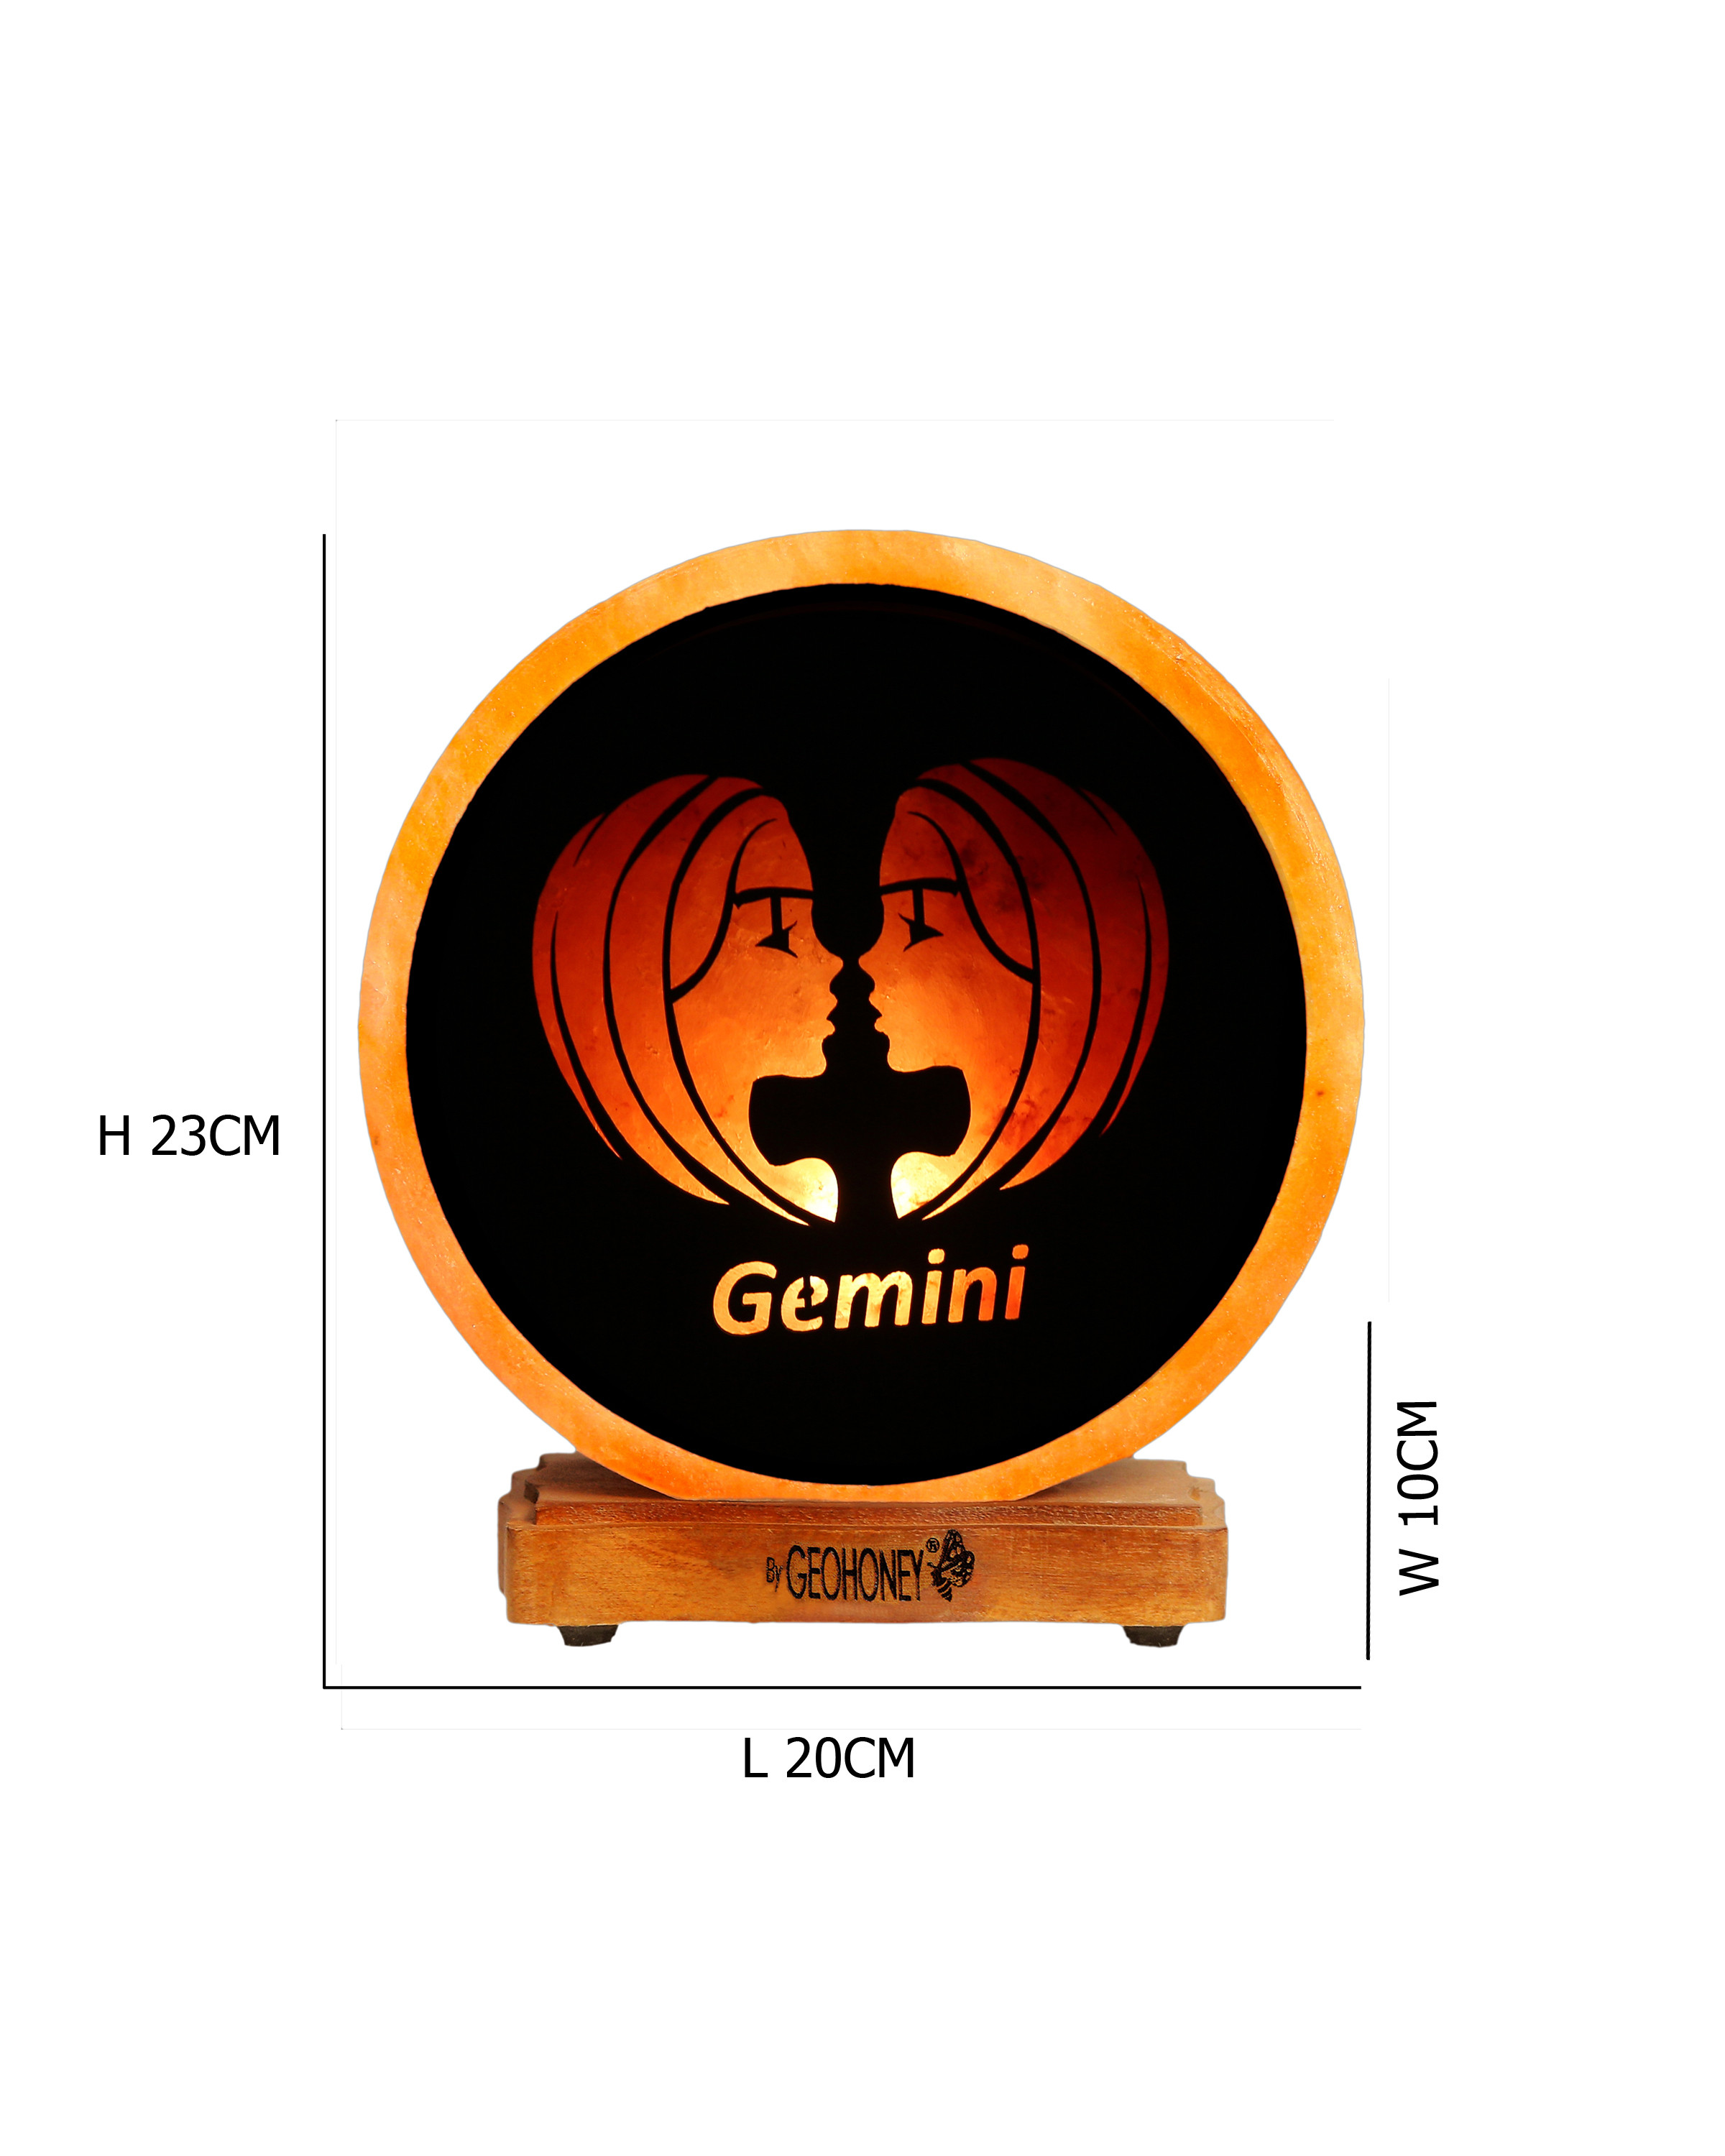 Geohoney Himalayan Salt Lamp - Zodiac Sign Gemini